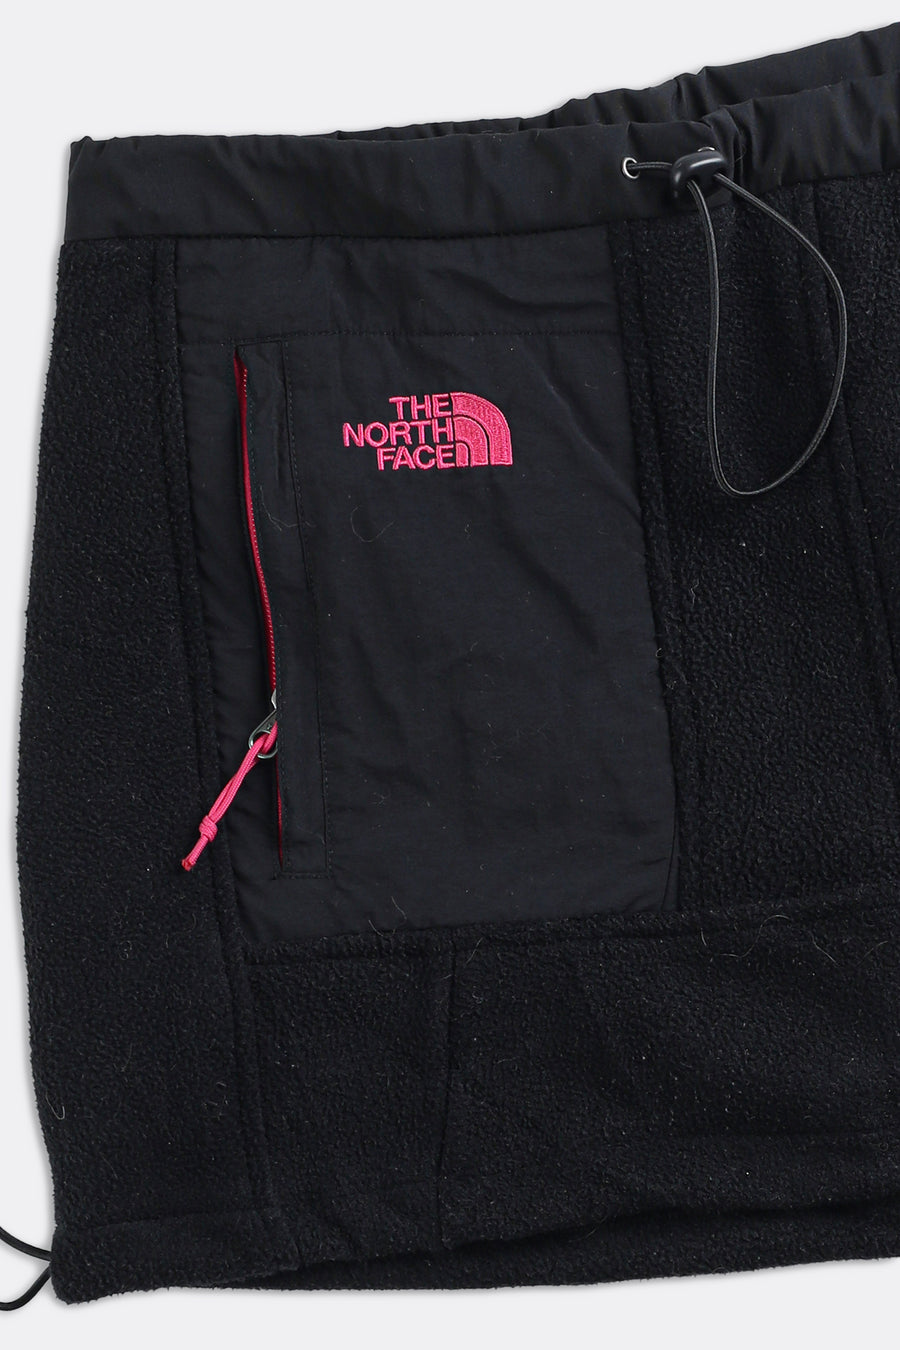 Rework North Face Fleece Mini Skirt - S, M